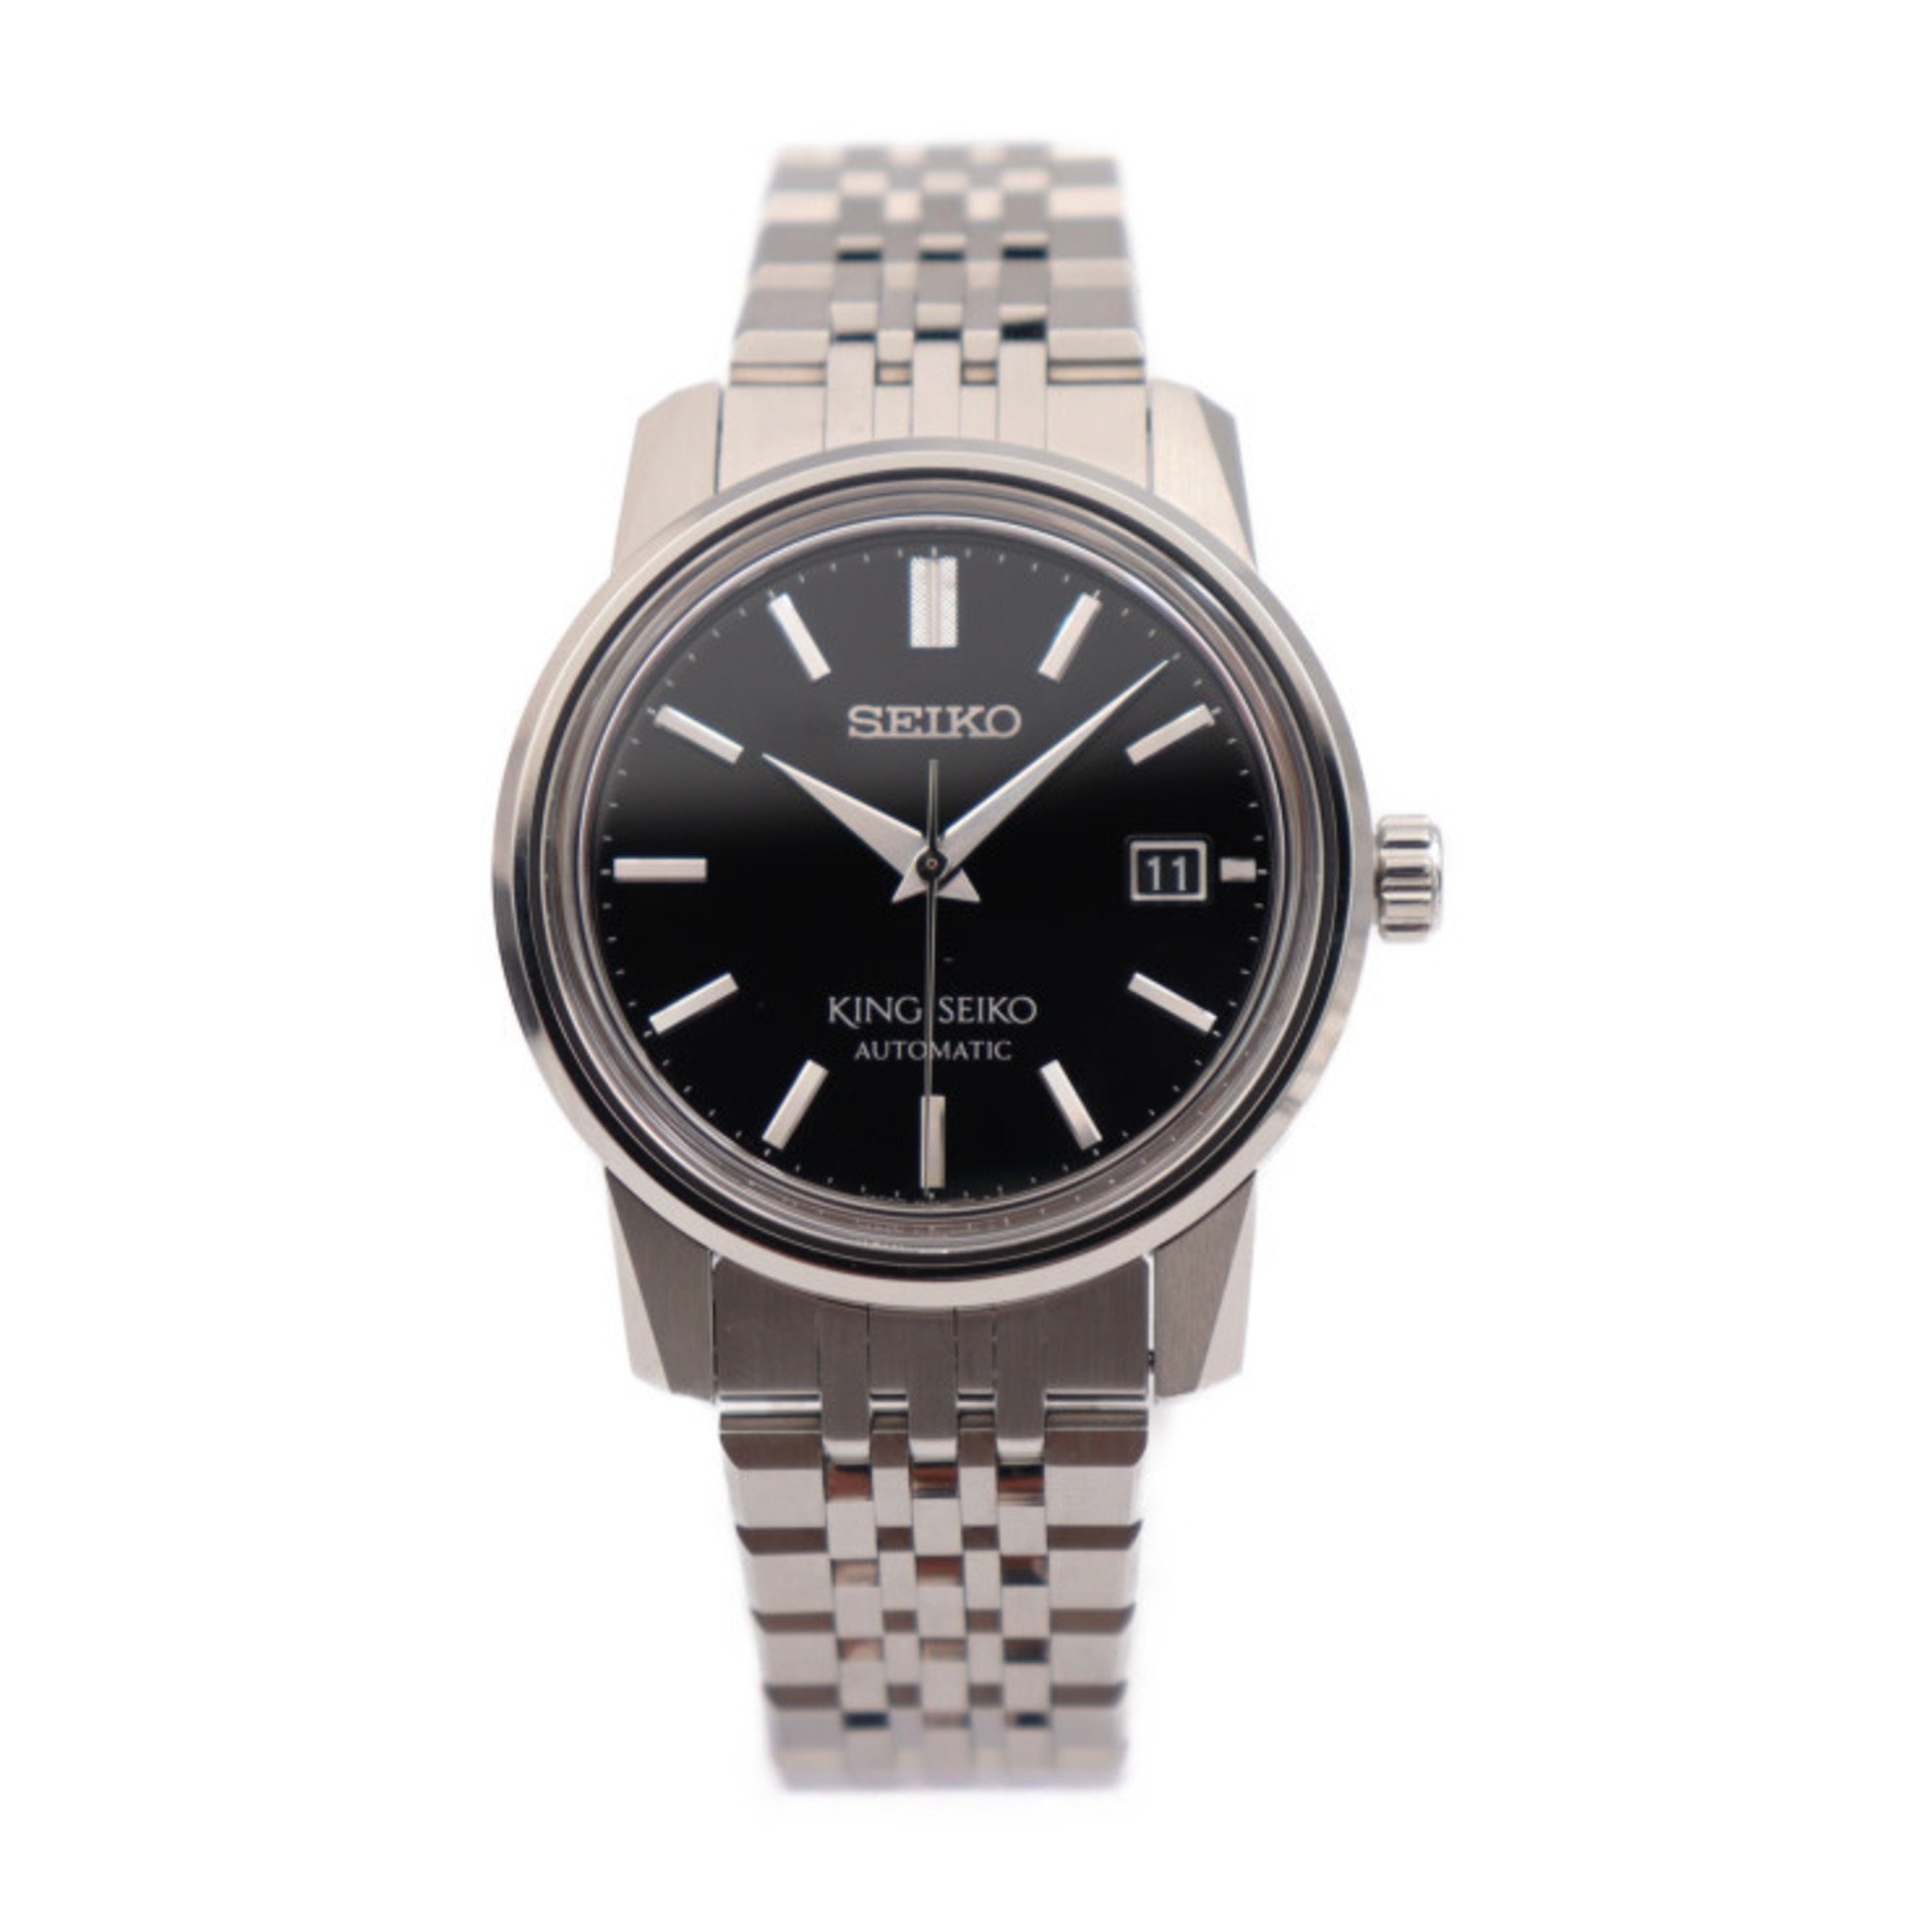 SEIKO King Seiko Automatic Watch 6L35-00G0 SDKA007 Stainless Steel Silver Black Dial Date